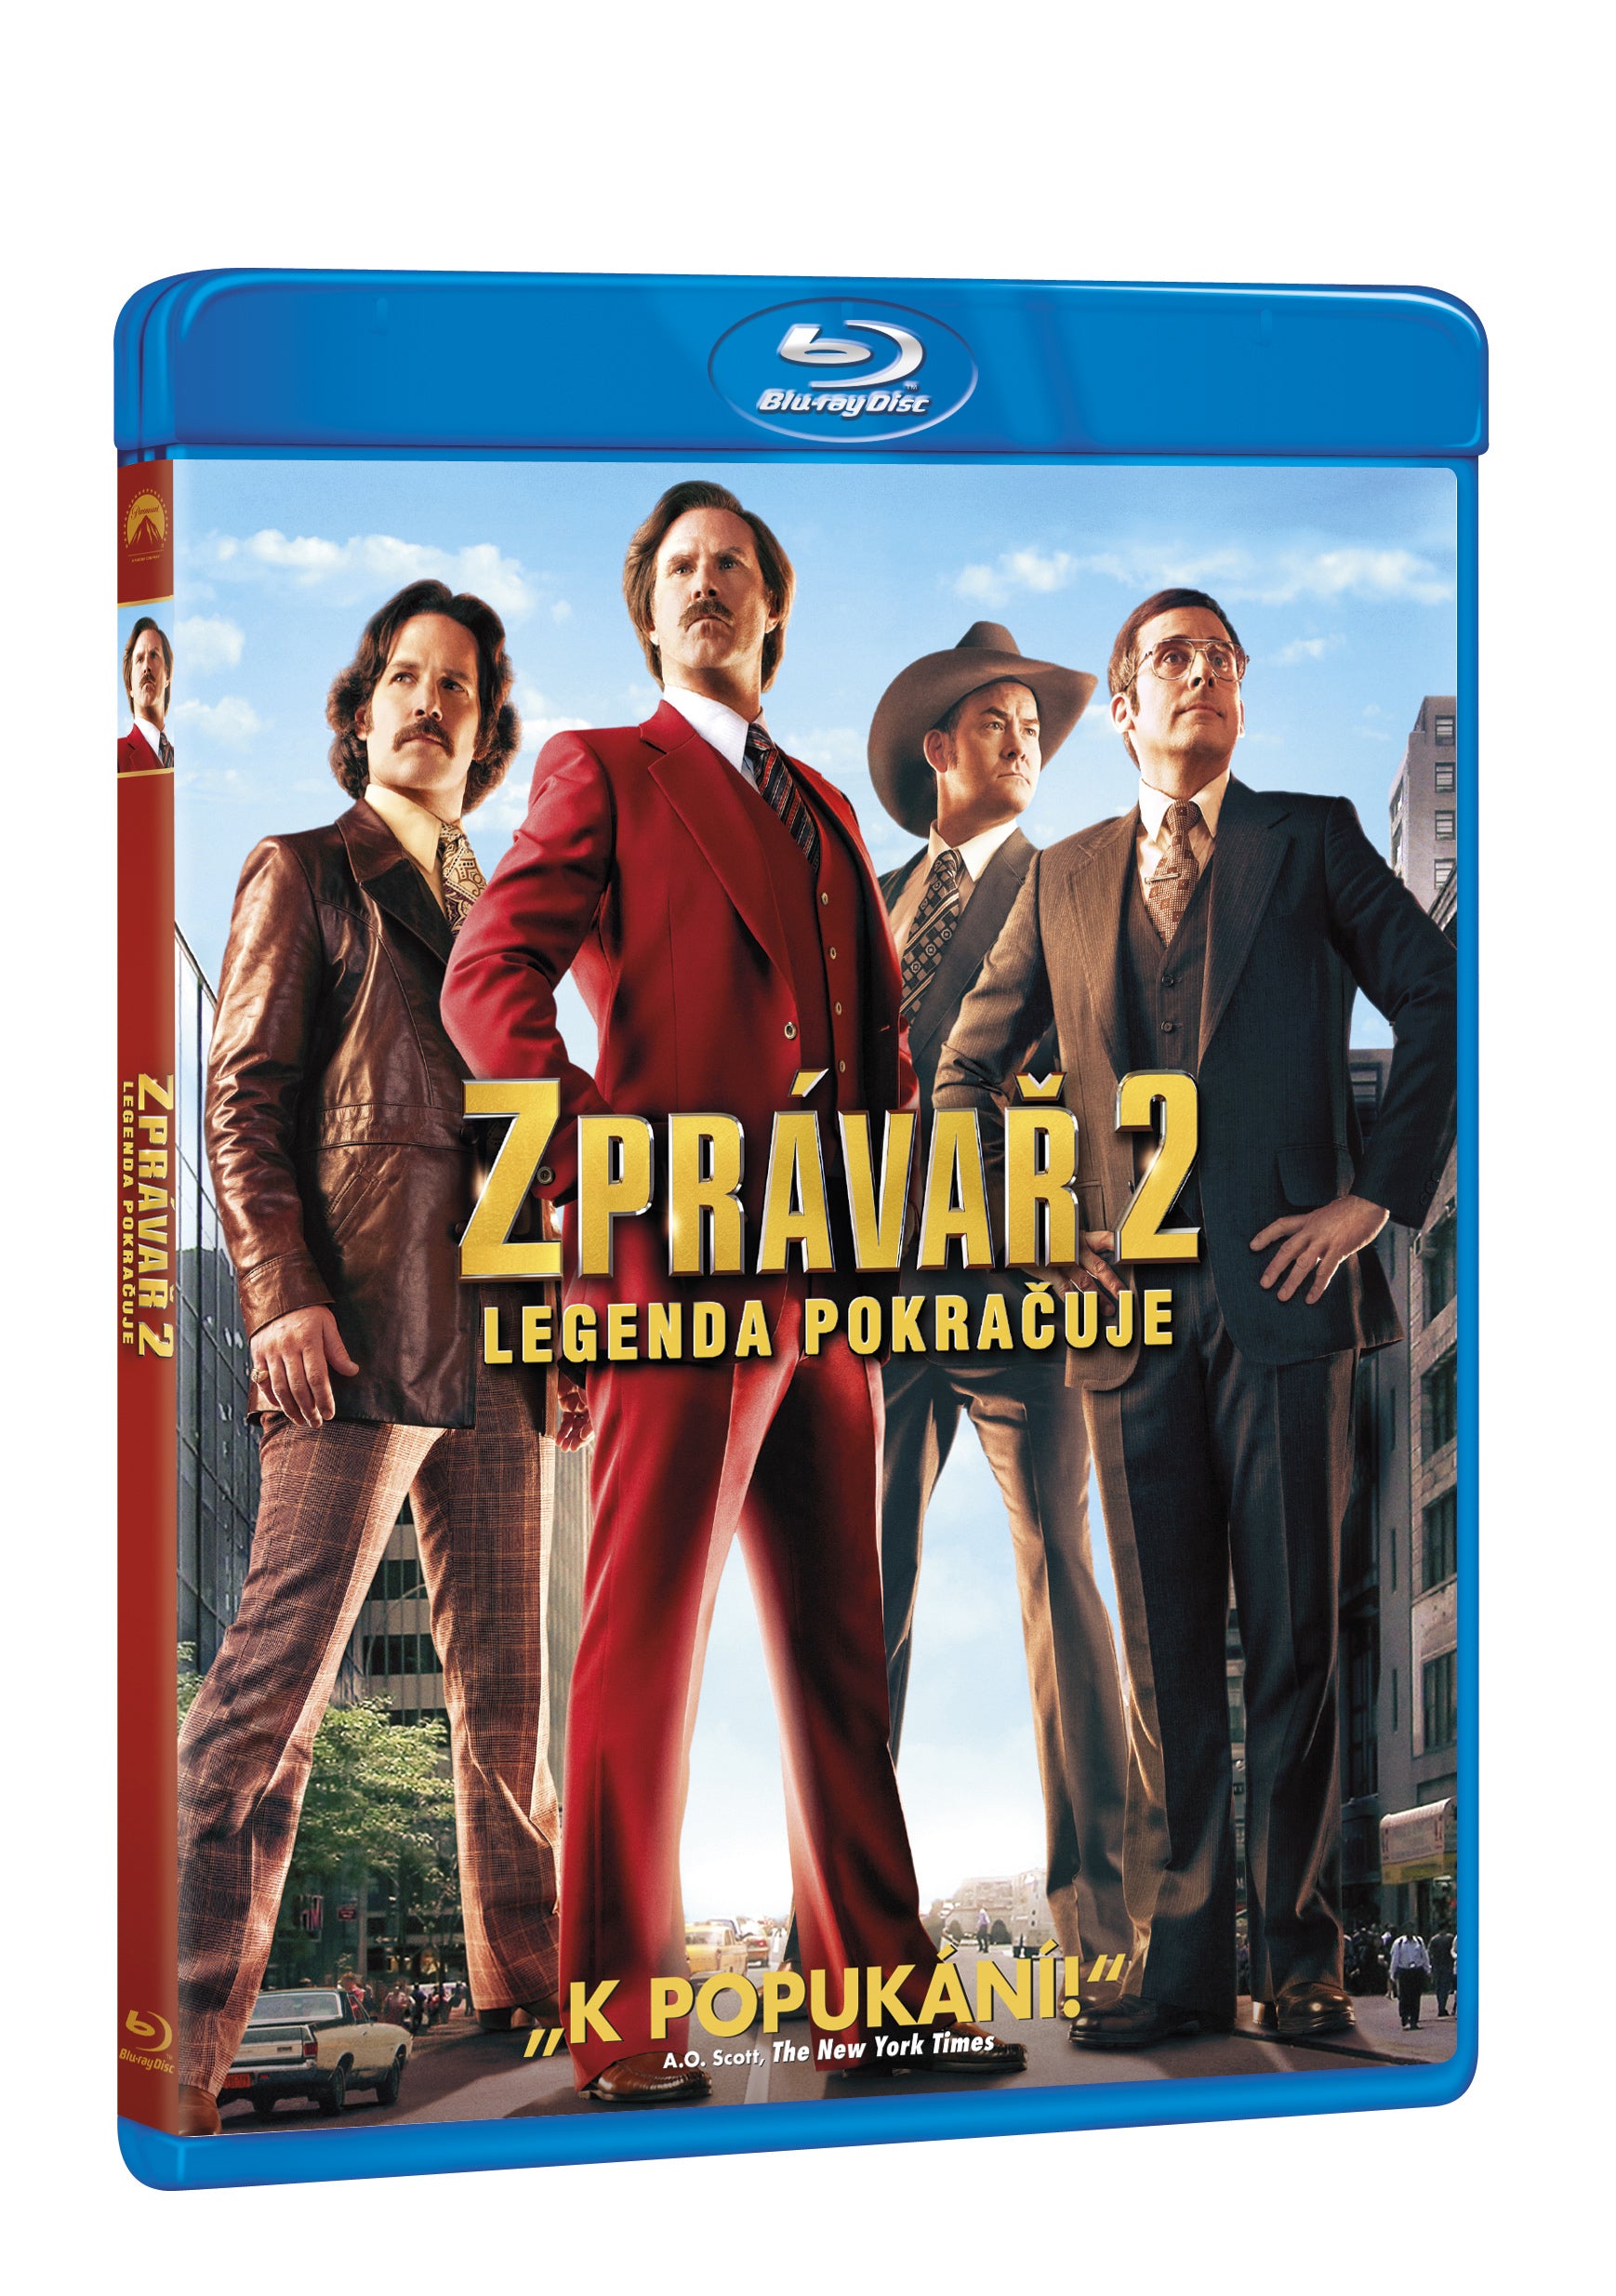 Zpravar 2 - Legenda pokracuje BD / Anchorman: The Legend Continues - Czech version